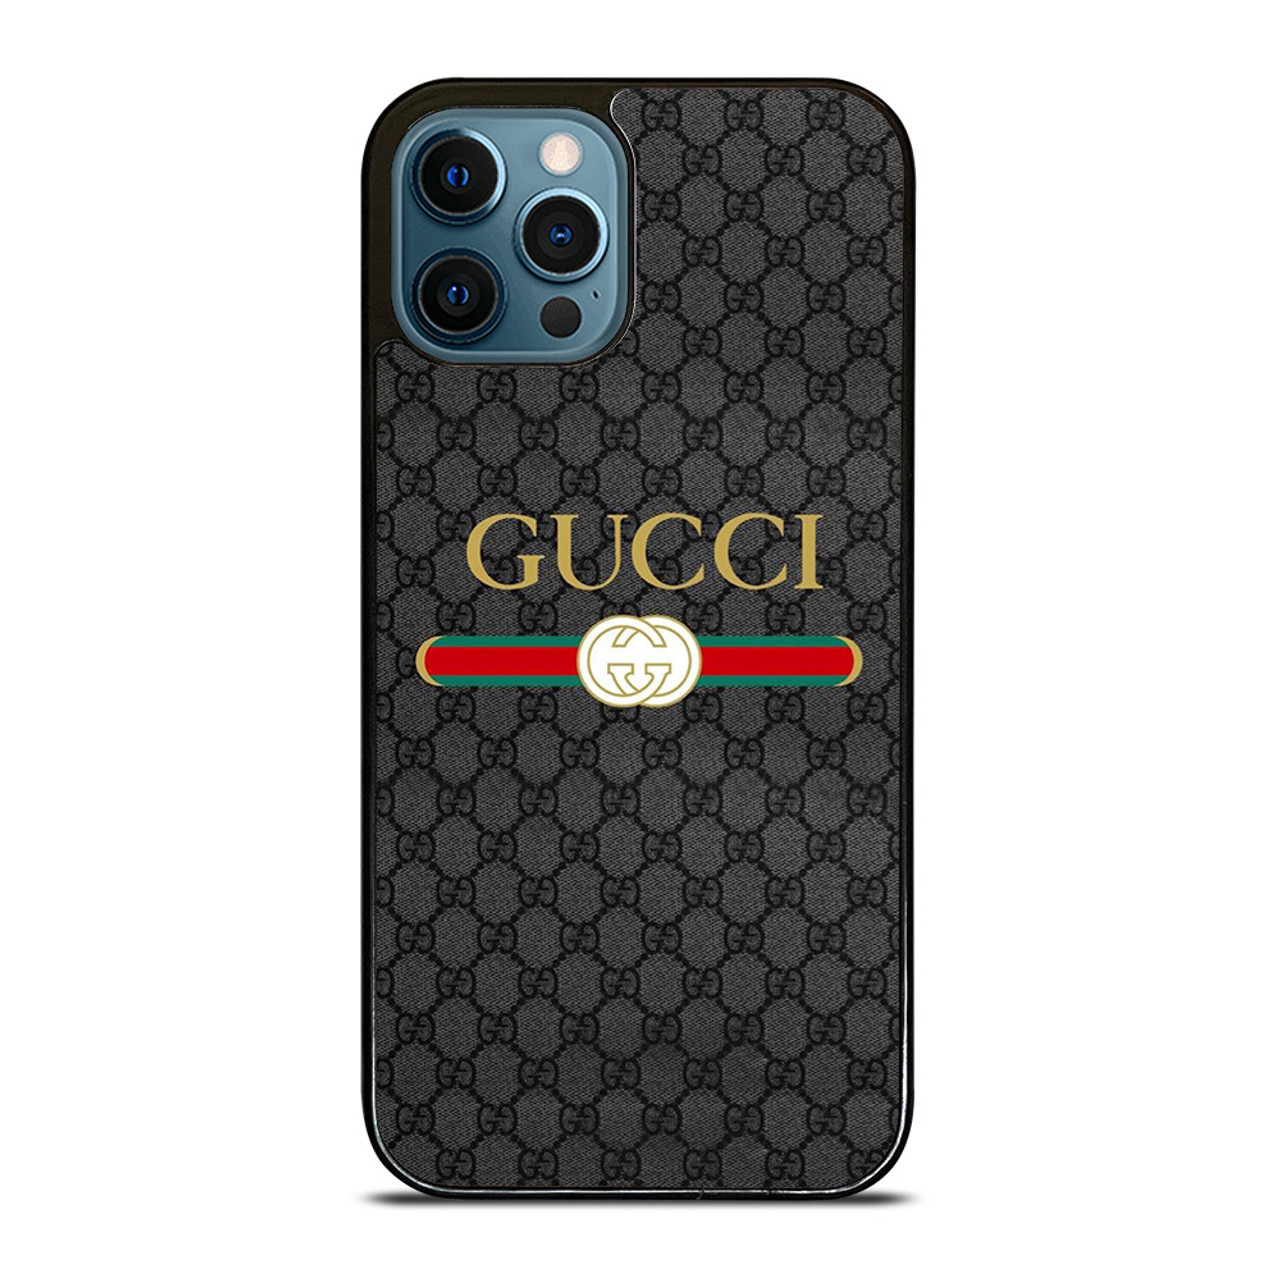 GUCCI LOGO ICON PATTERN iPhone 12 Pro Max Case Cover